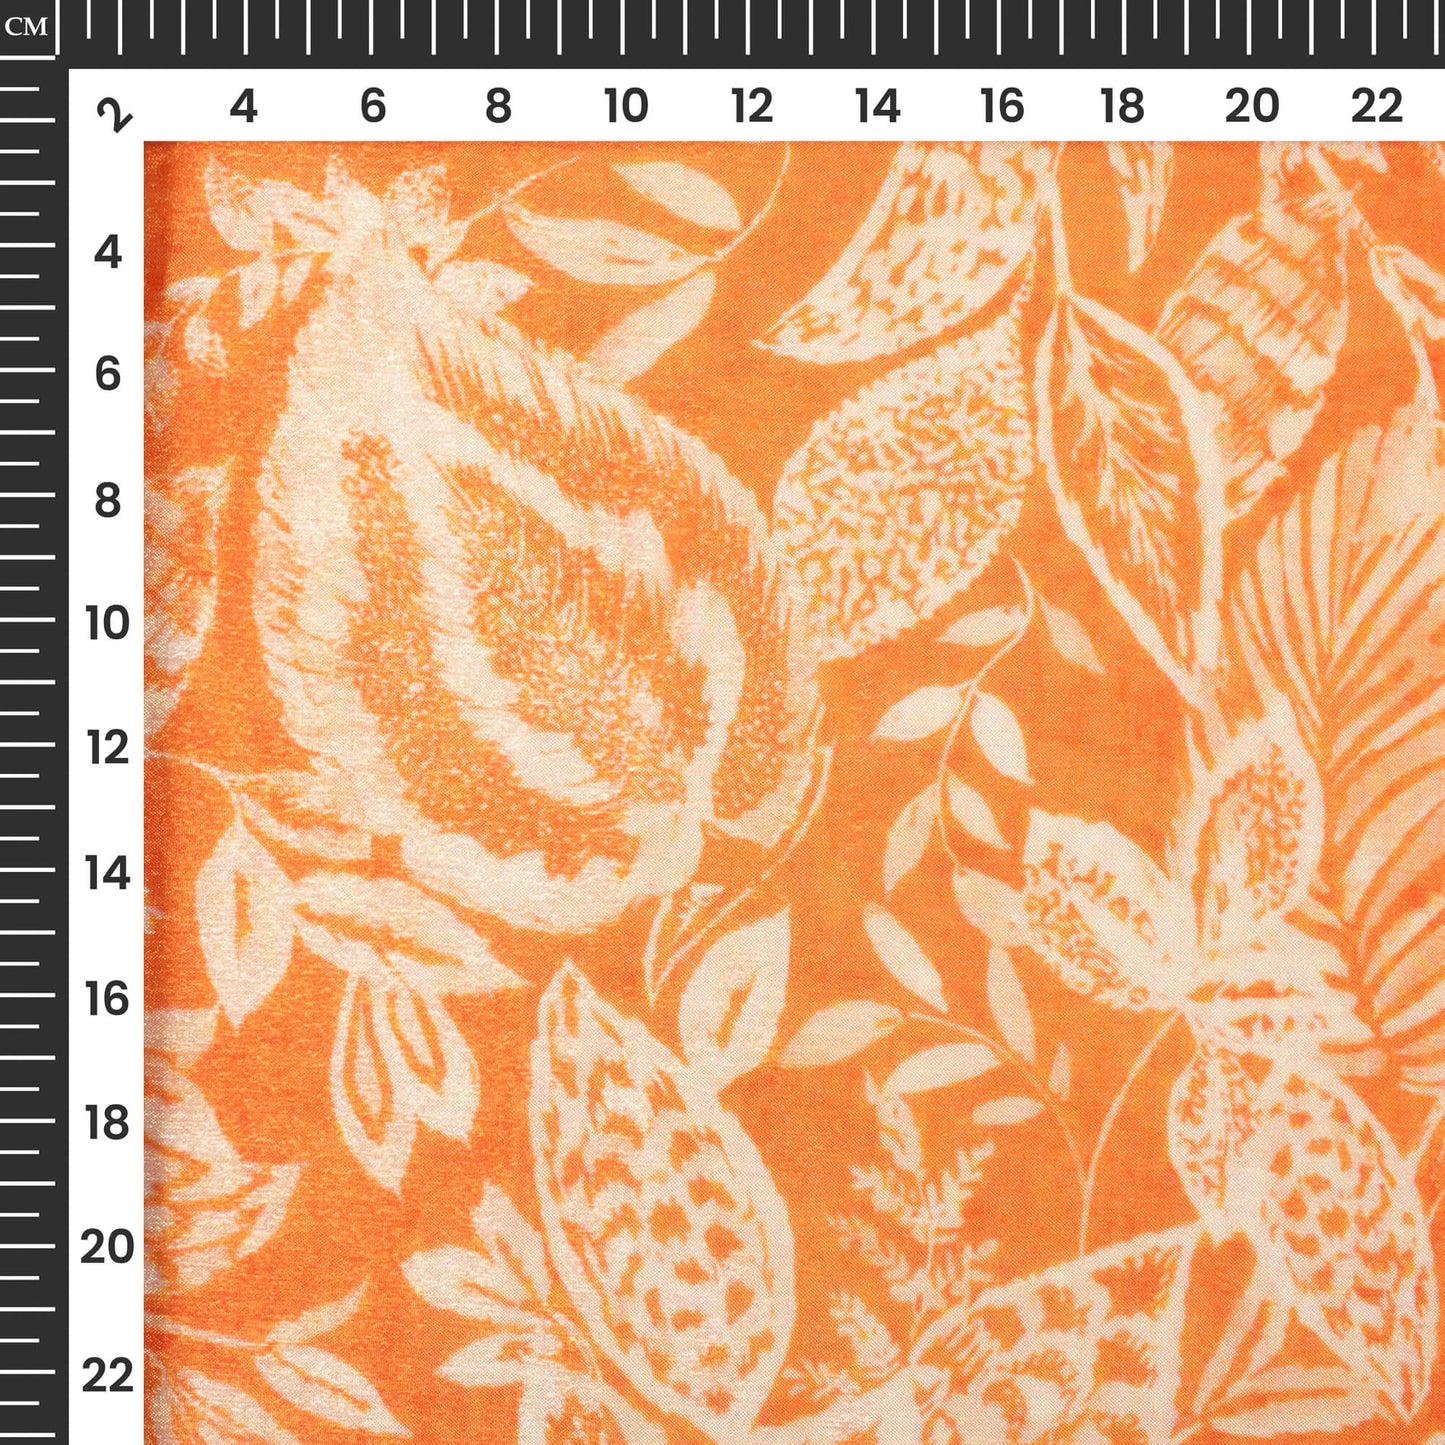 Stunning Floral Digital Print Poly Chinnon Chiffon Fabric